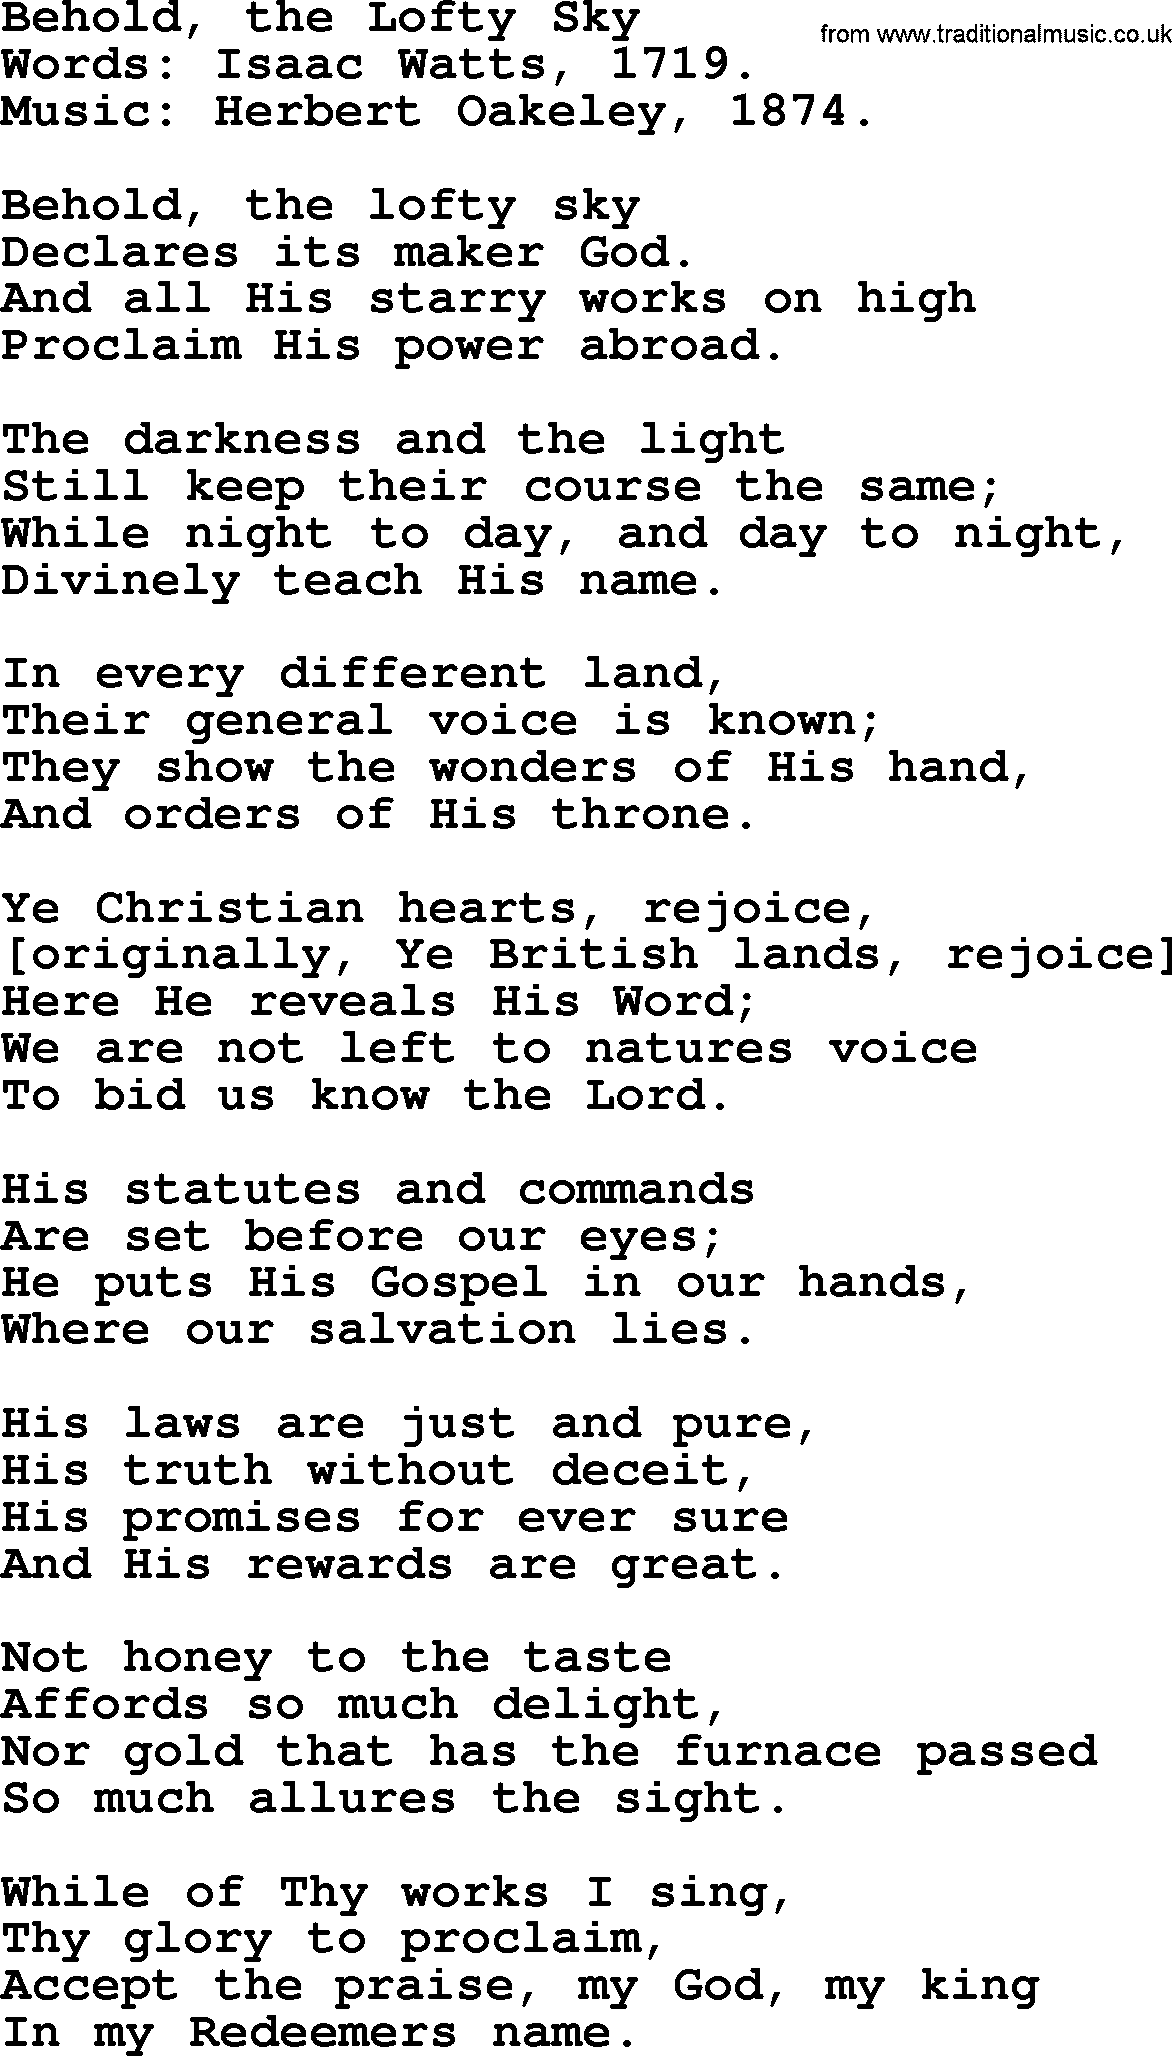 Isaac Watts Christian hymn: Behold, the Lofty Sky- lyricss